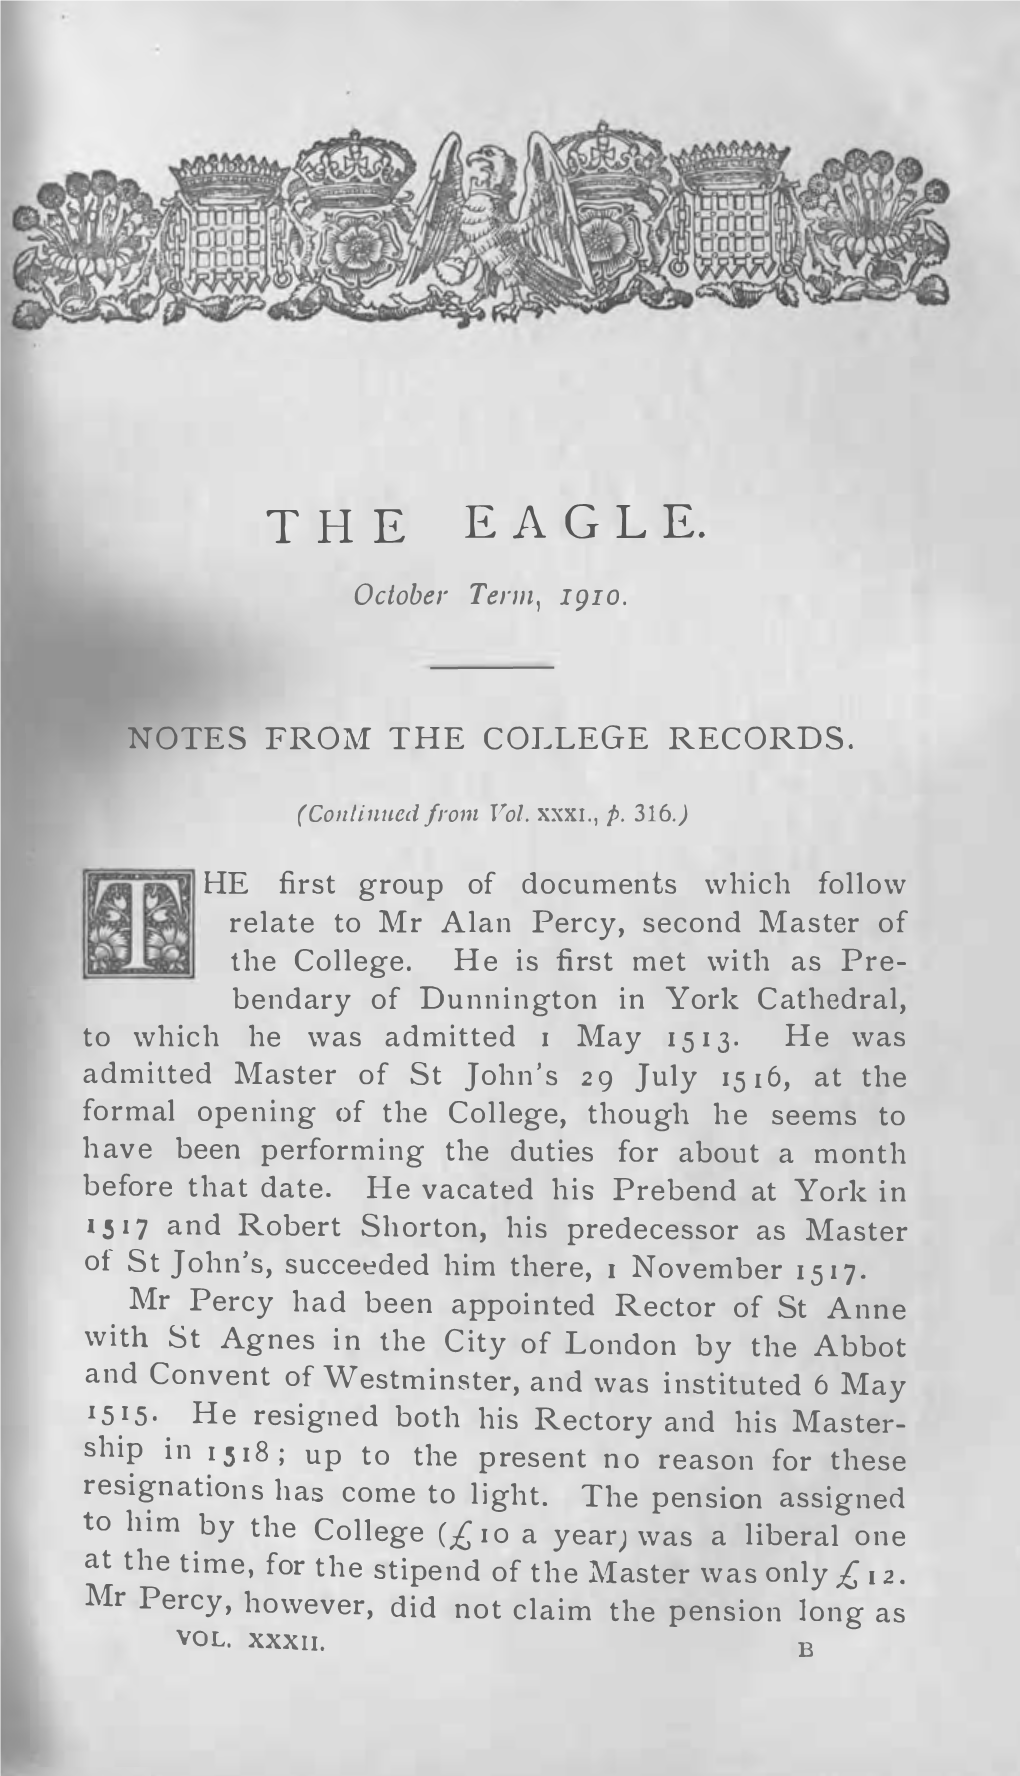 The Eagle 1910 (Michaelmas Term)